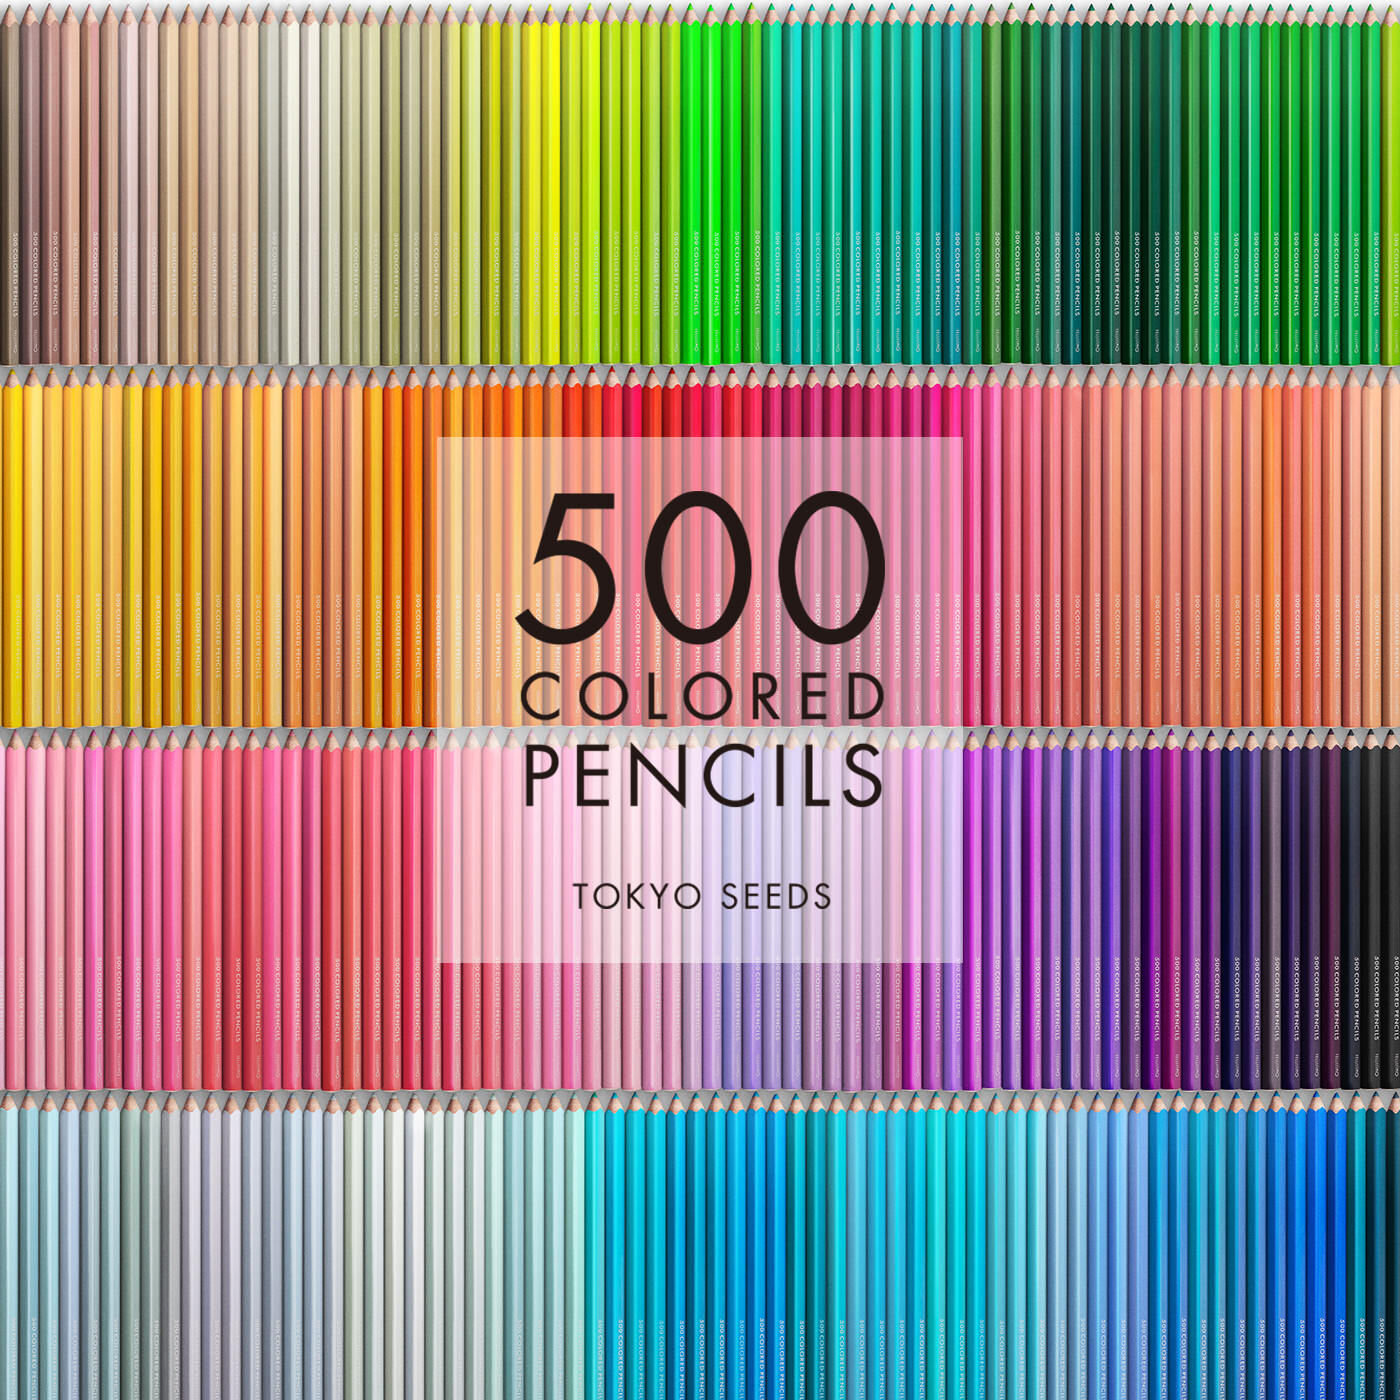 Real Stock|【410/500 BEACHY KEEN】500色の色えんぴつ TOKYO SEEDS|1992年、世界初の「500色」という膨大な色数の色えんぴつが誕生して以来、その販売数は発売当初から合わせると、世界55ヵ国10万セット以上。今回、メイド・イン・ジャパンにこだわり、すべてが新しく生まれ変わって登場しました。